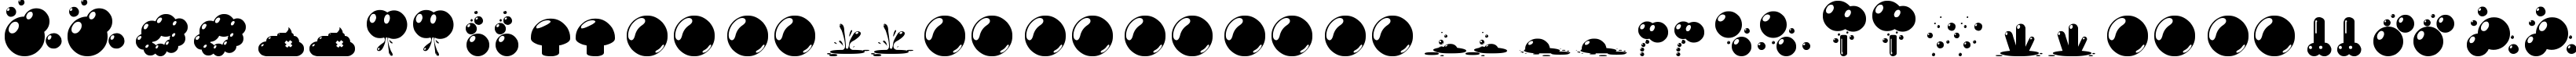 Пример написания английского алфавита шрифтом bubble